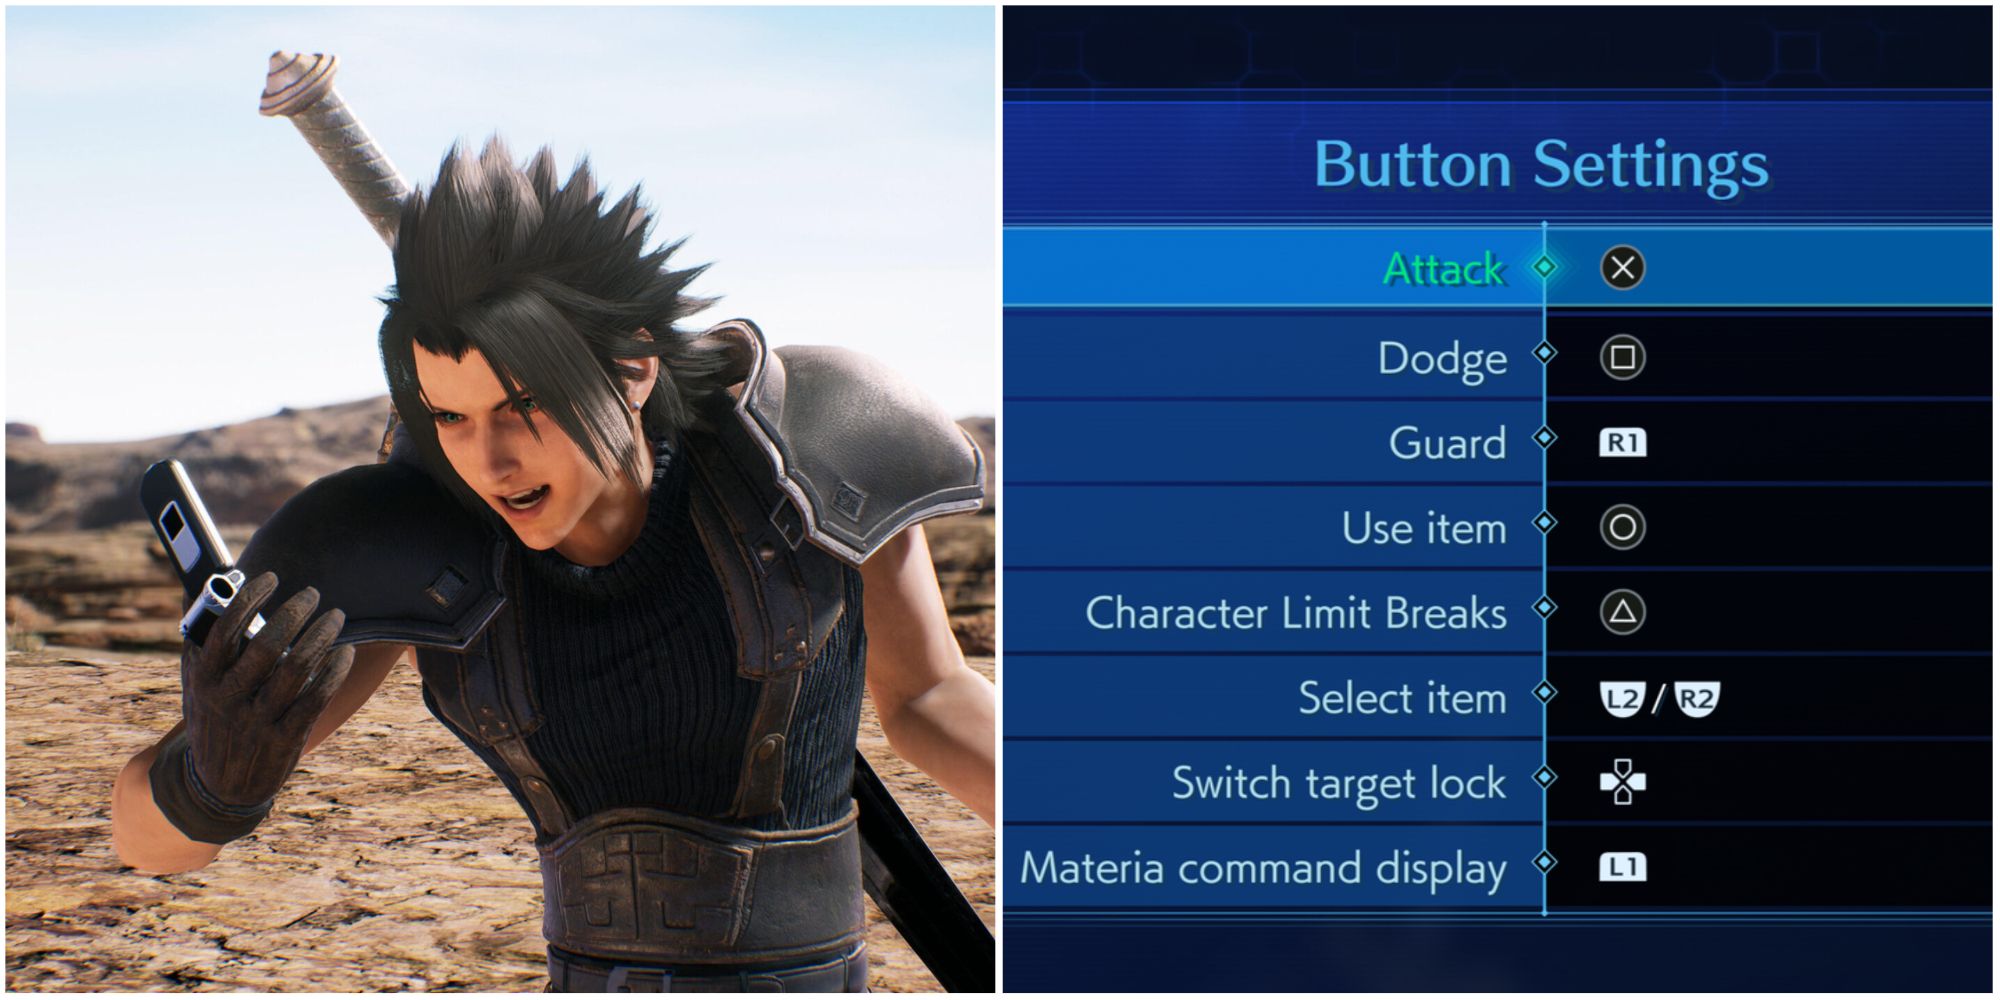 Button settings in Crisis Core: Final Fantasy 7 Reunion